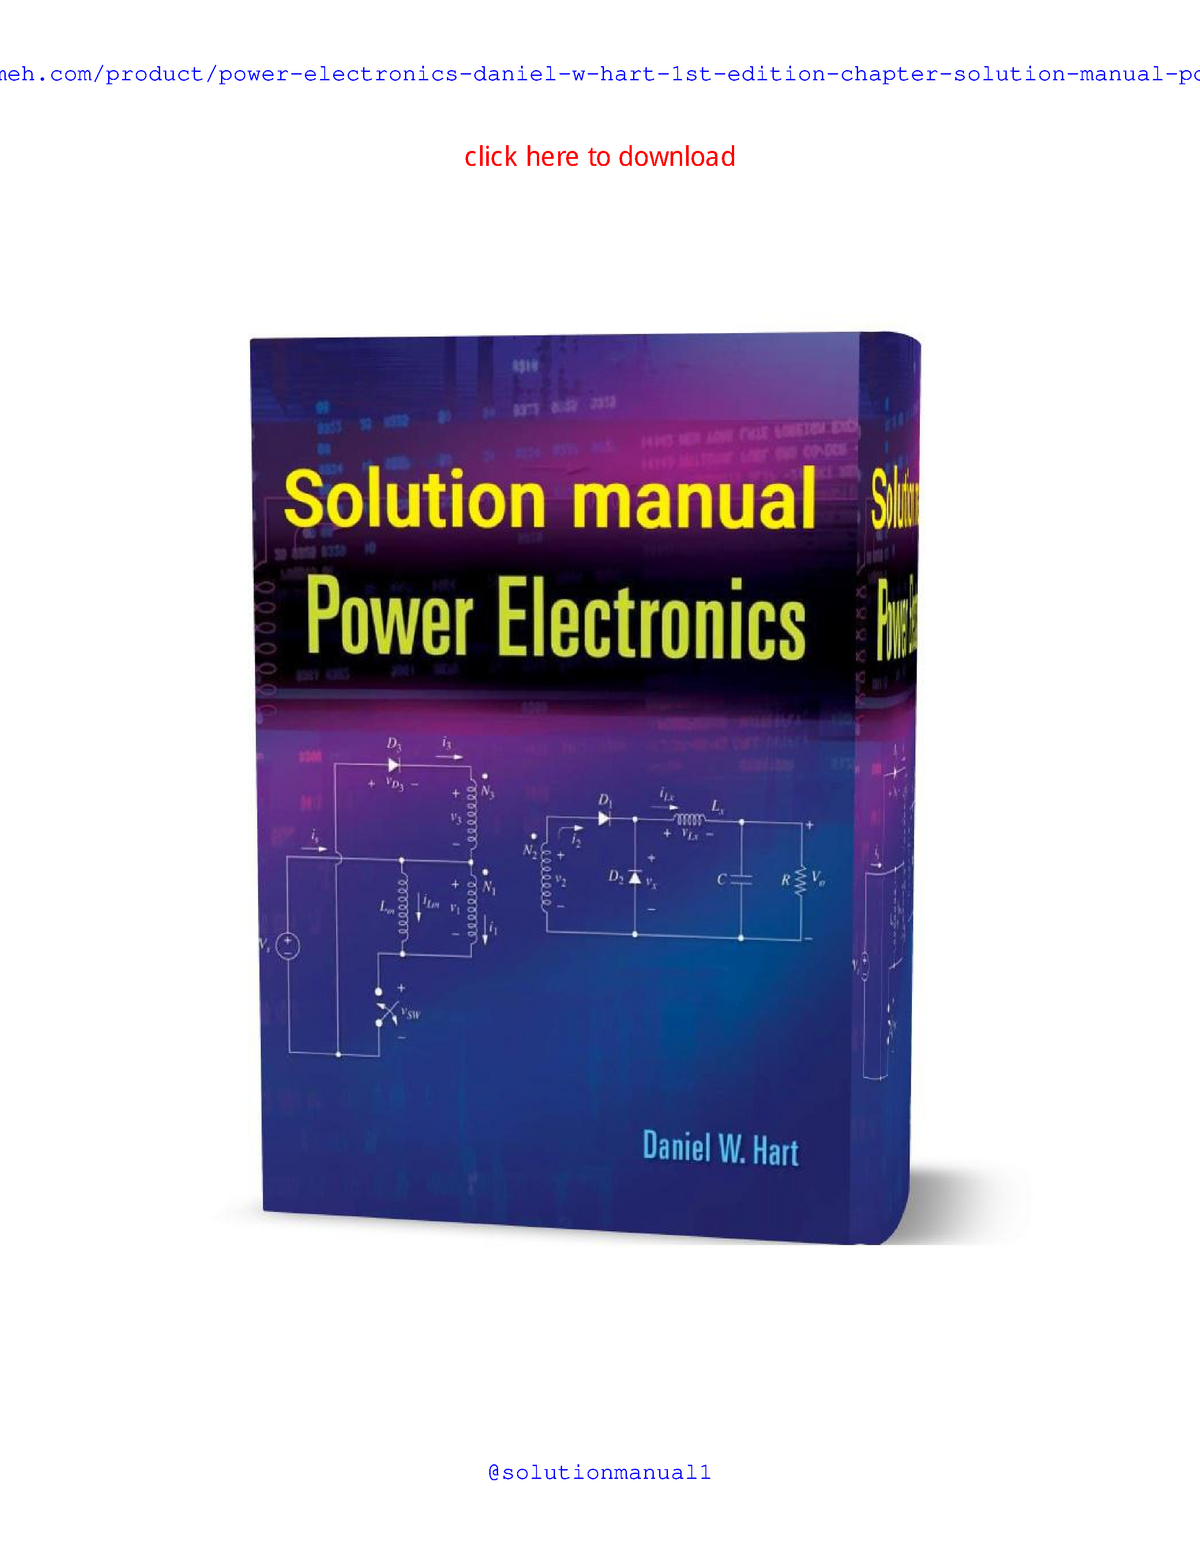 power electronics daniel w hart solution manual